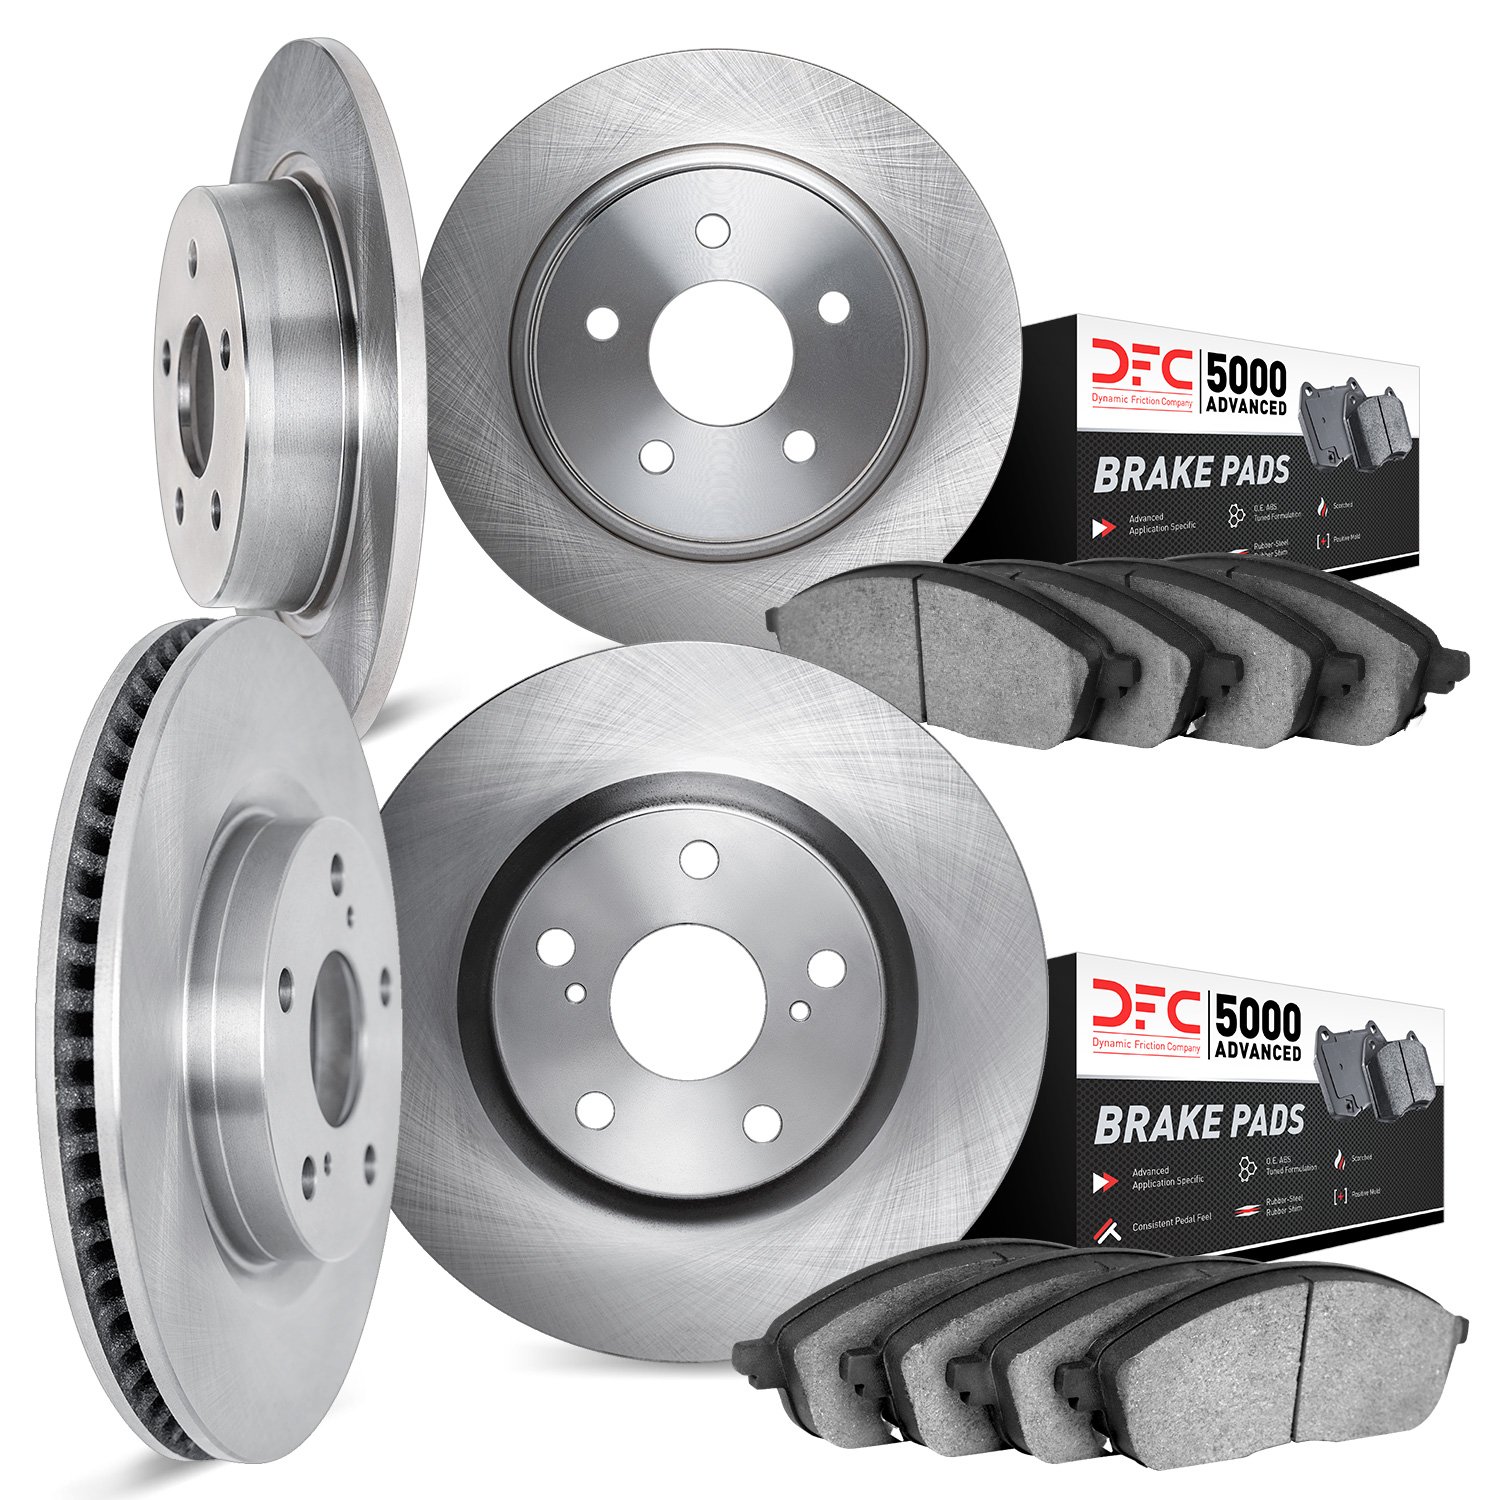 6504-39077 Brake Rotors w/5000 Advanced Brake Pads Kit, Fits Select Mopar, Position: Front and Rear